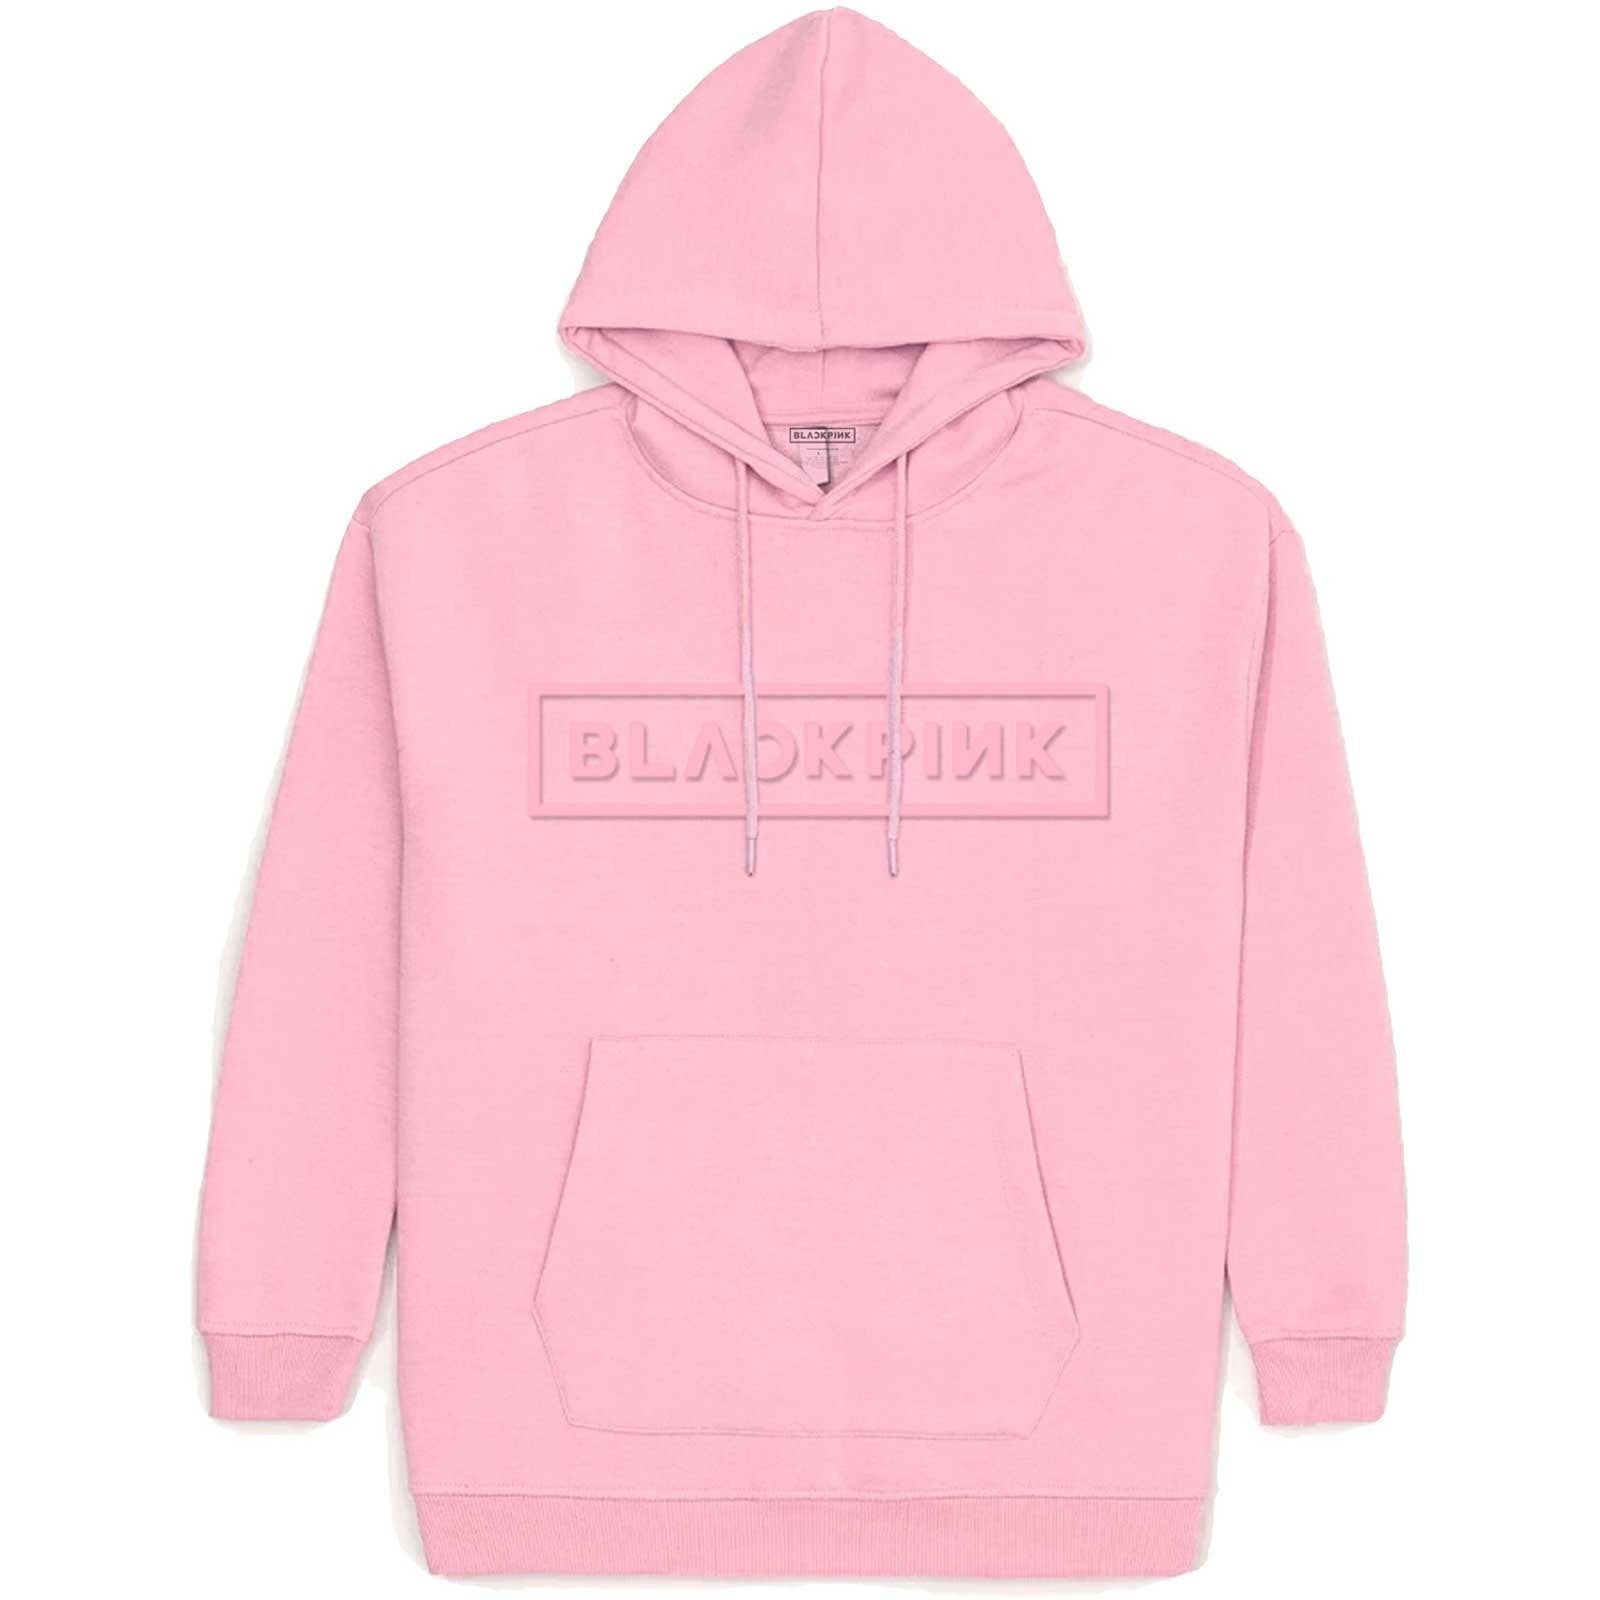 BlackPink Unisex Hoodie - Logo Design Pink Official Licensed Design - Worldwide Shipping - Jelly Frog